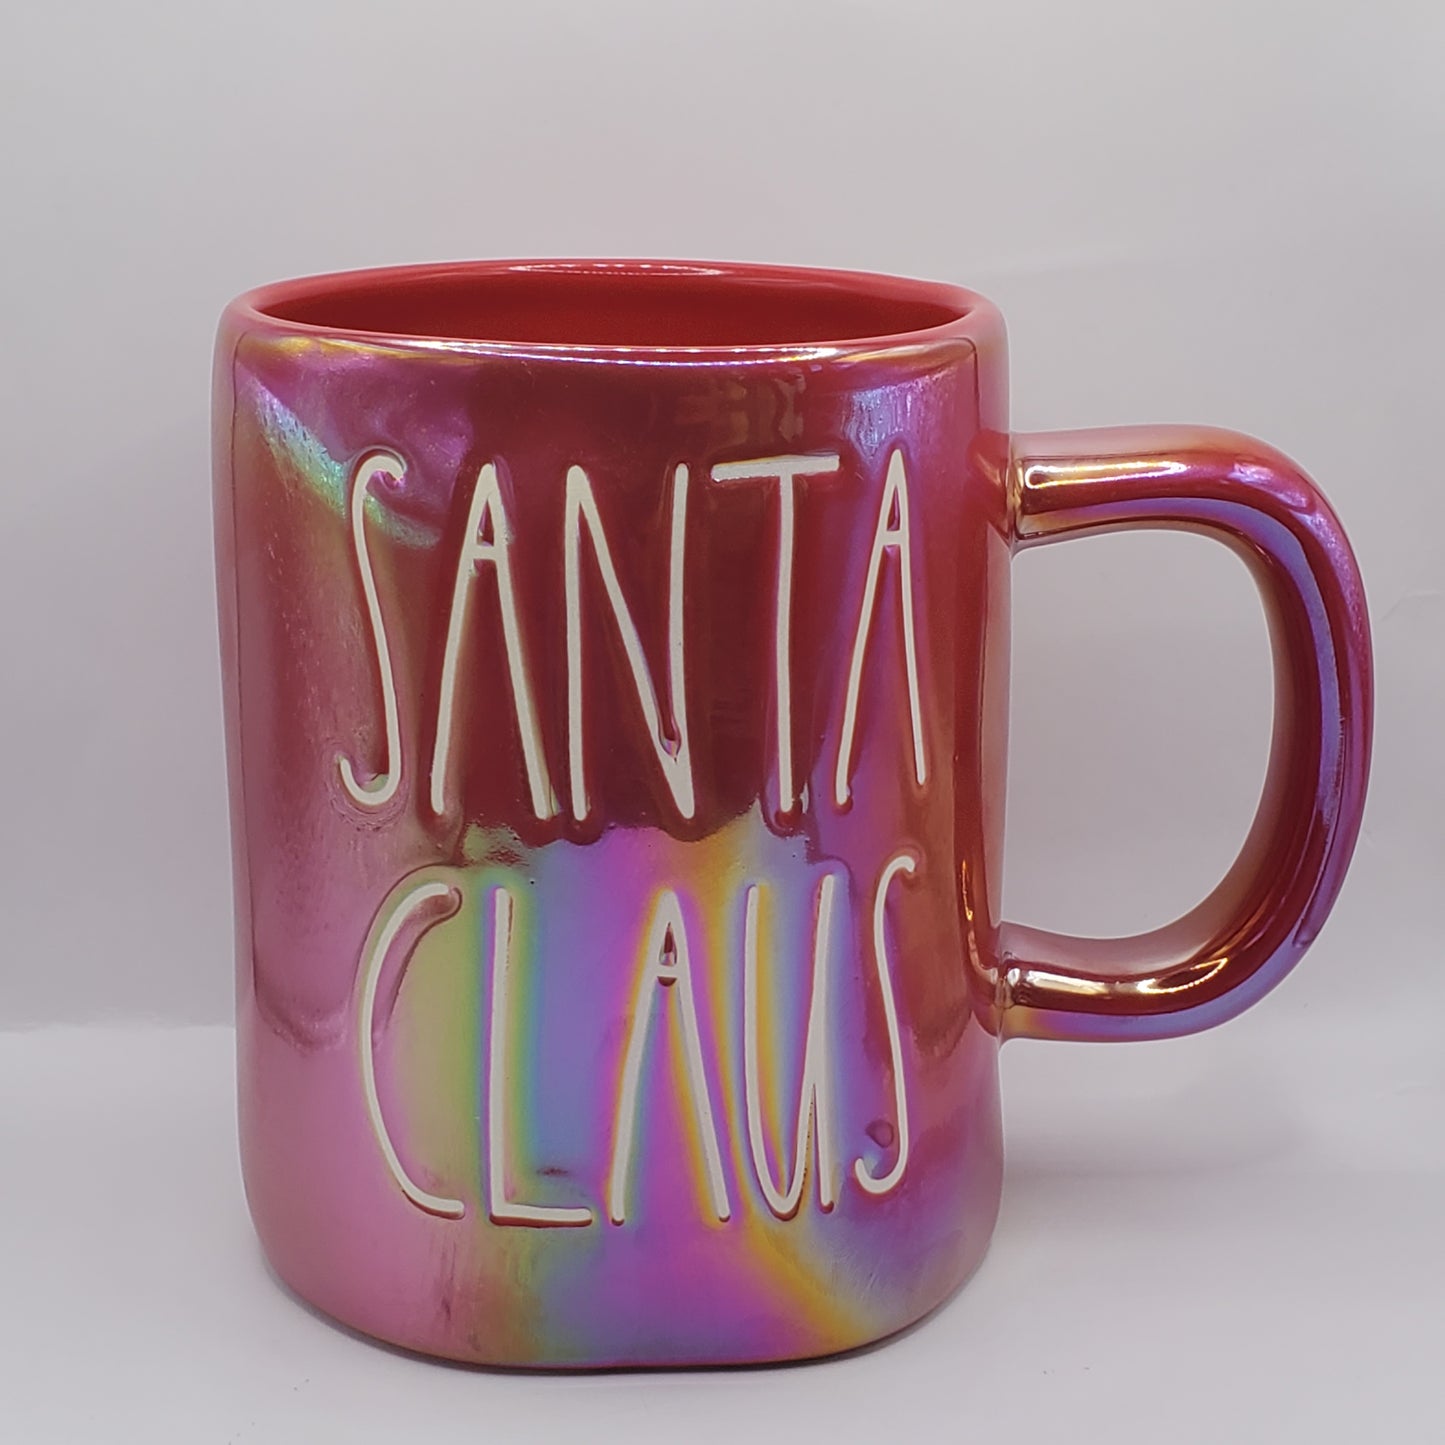 Santa Claus Iridescent Mug